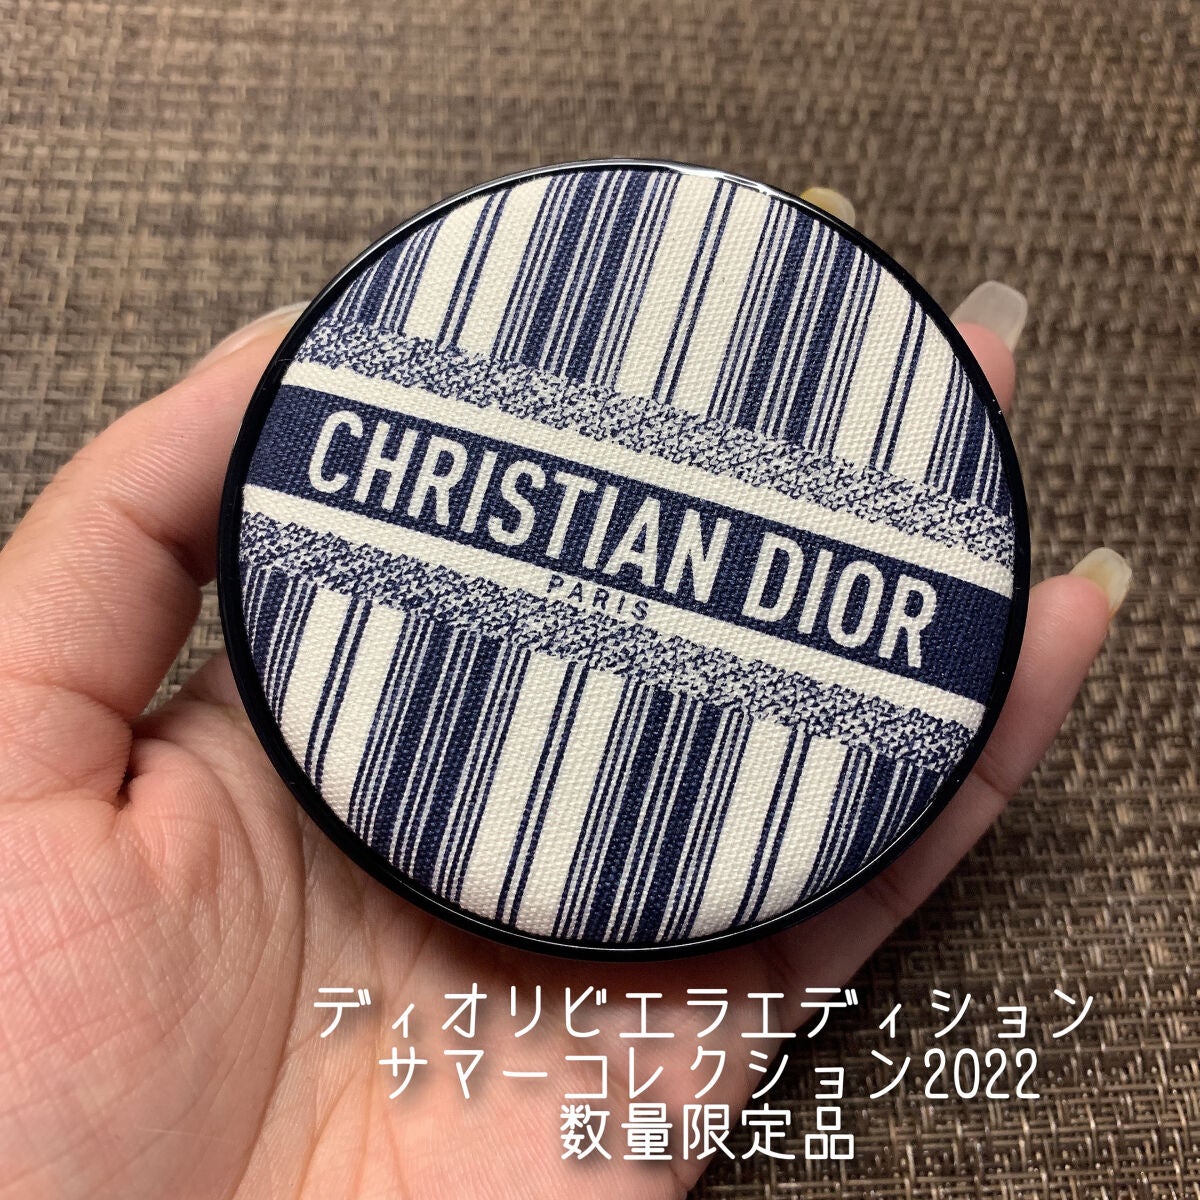 ♡ Dior ♡ ディオール クッションファンデーション 1N 限定 新品